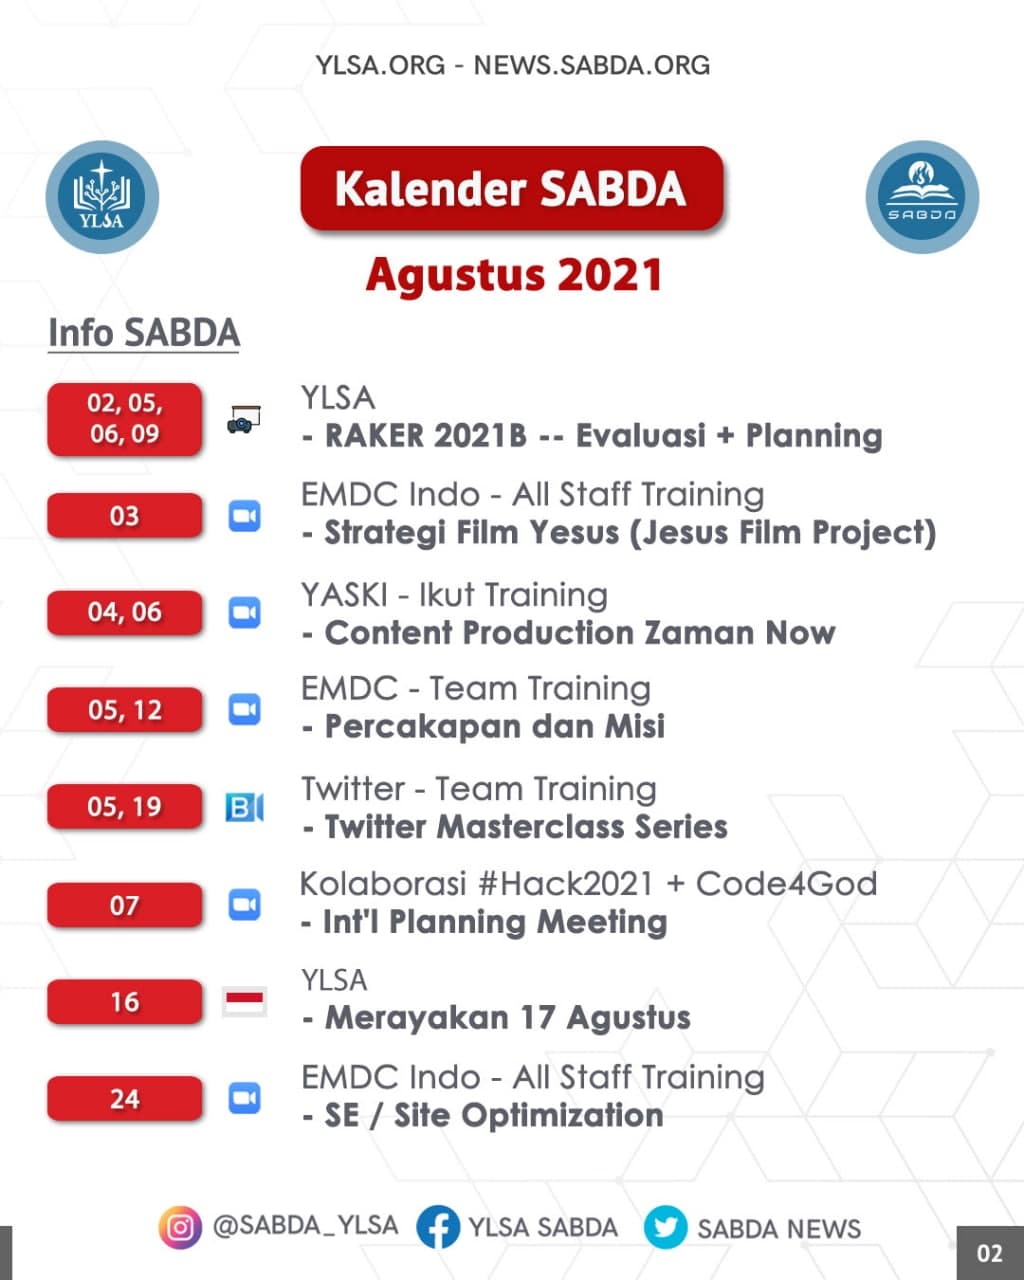 Kalender info SABDA selama Agustus 2021.